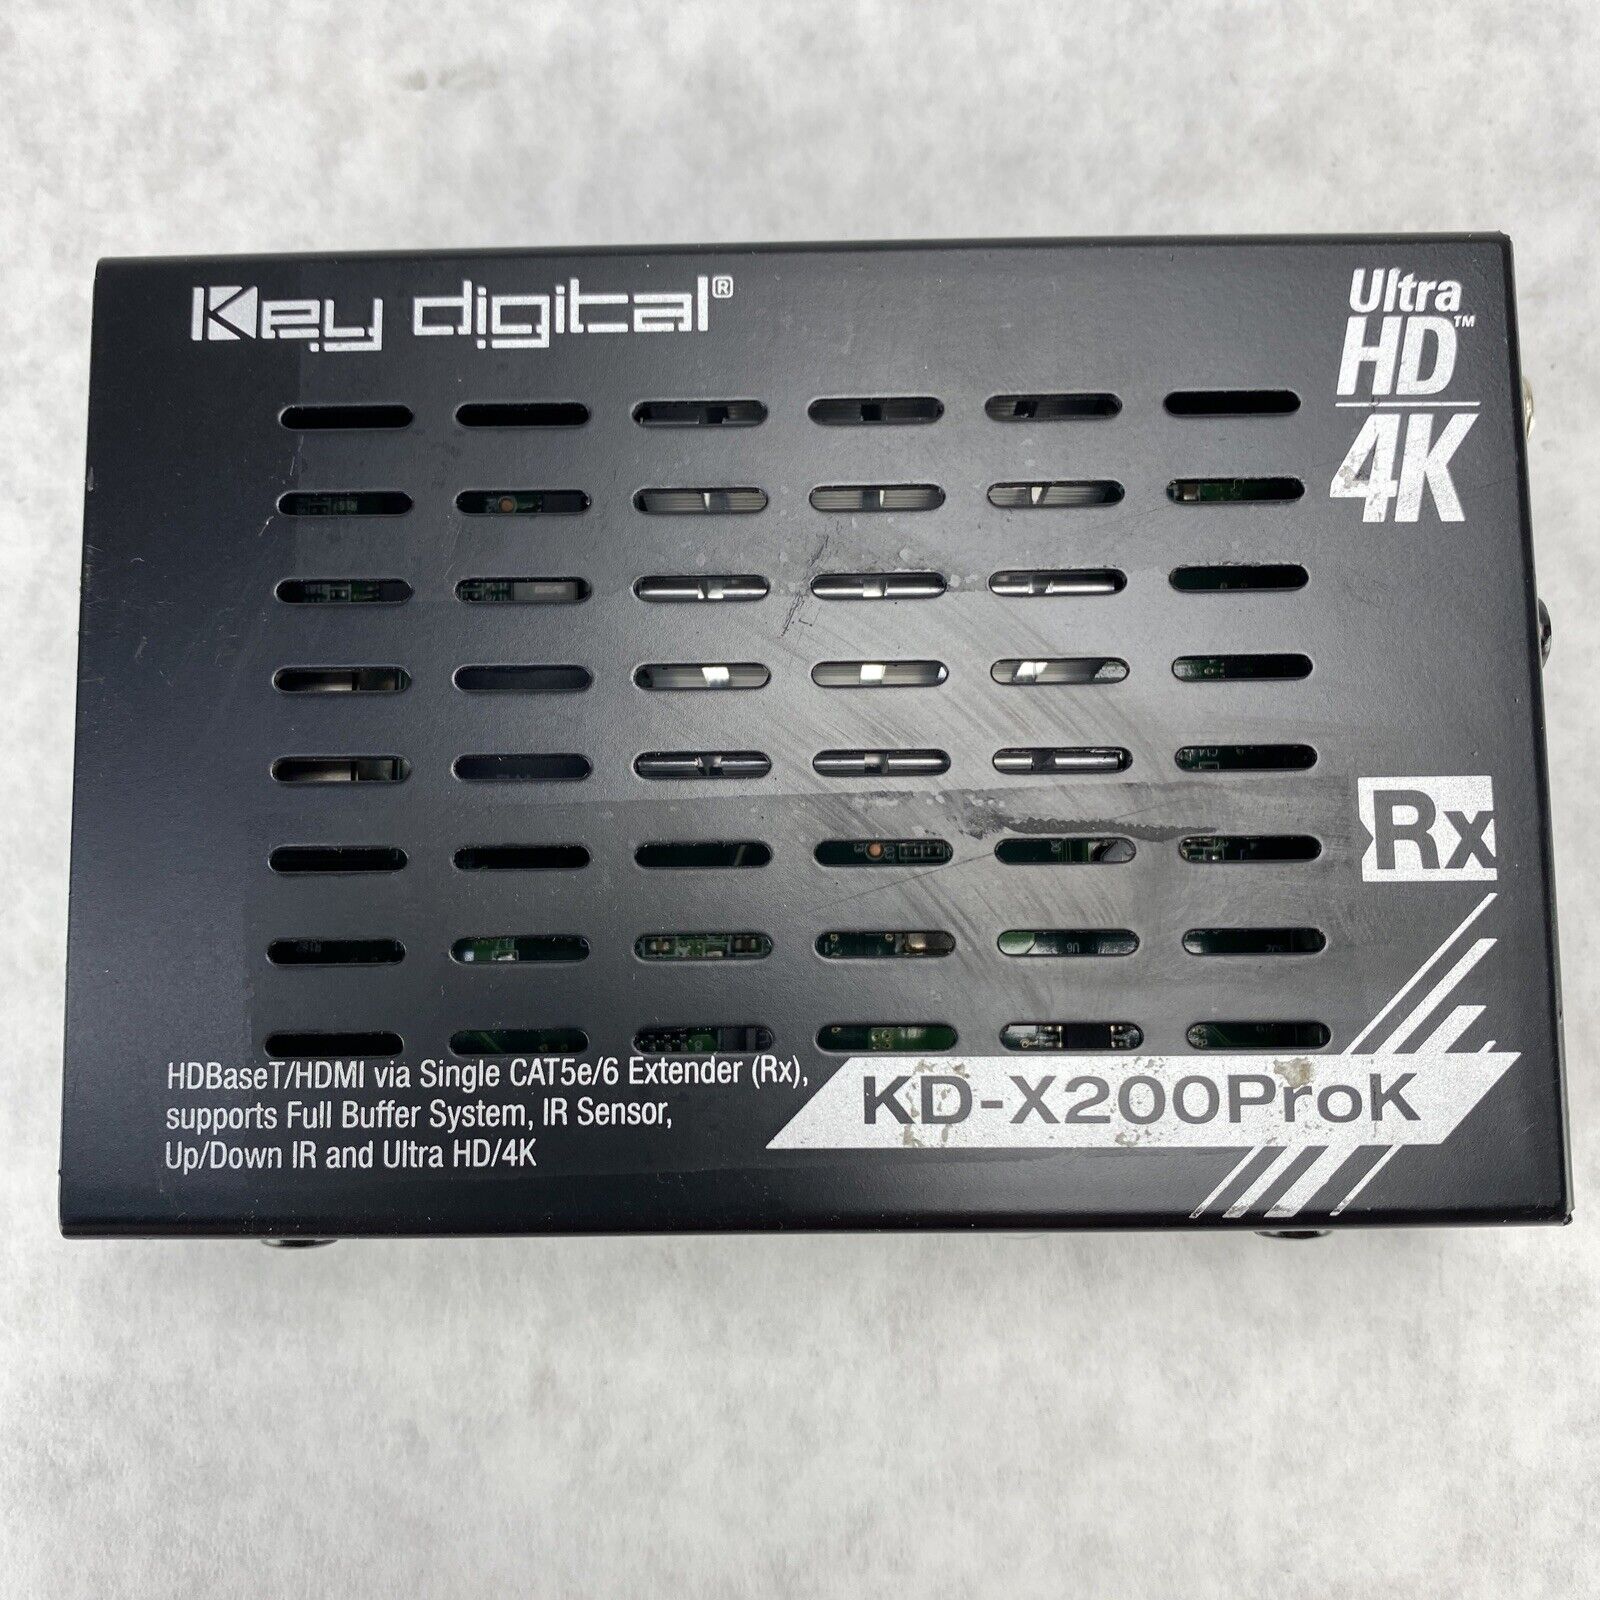 KeyDigital KD-X200ProK HDBaseT/HDMI CAT5e/6 RECIEVER ONLY No Power Supply